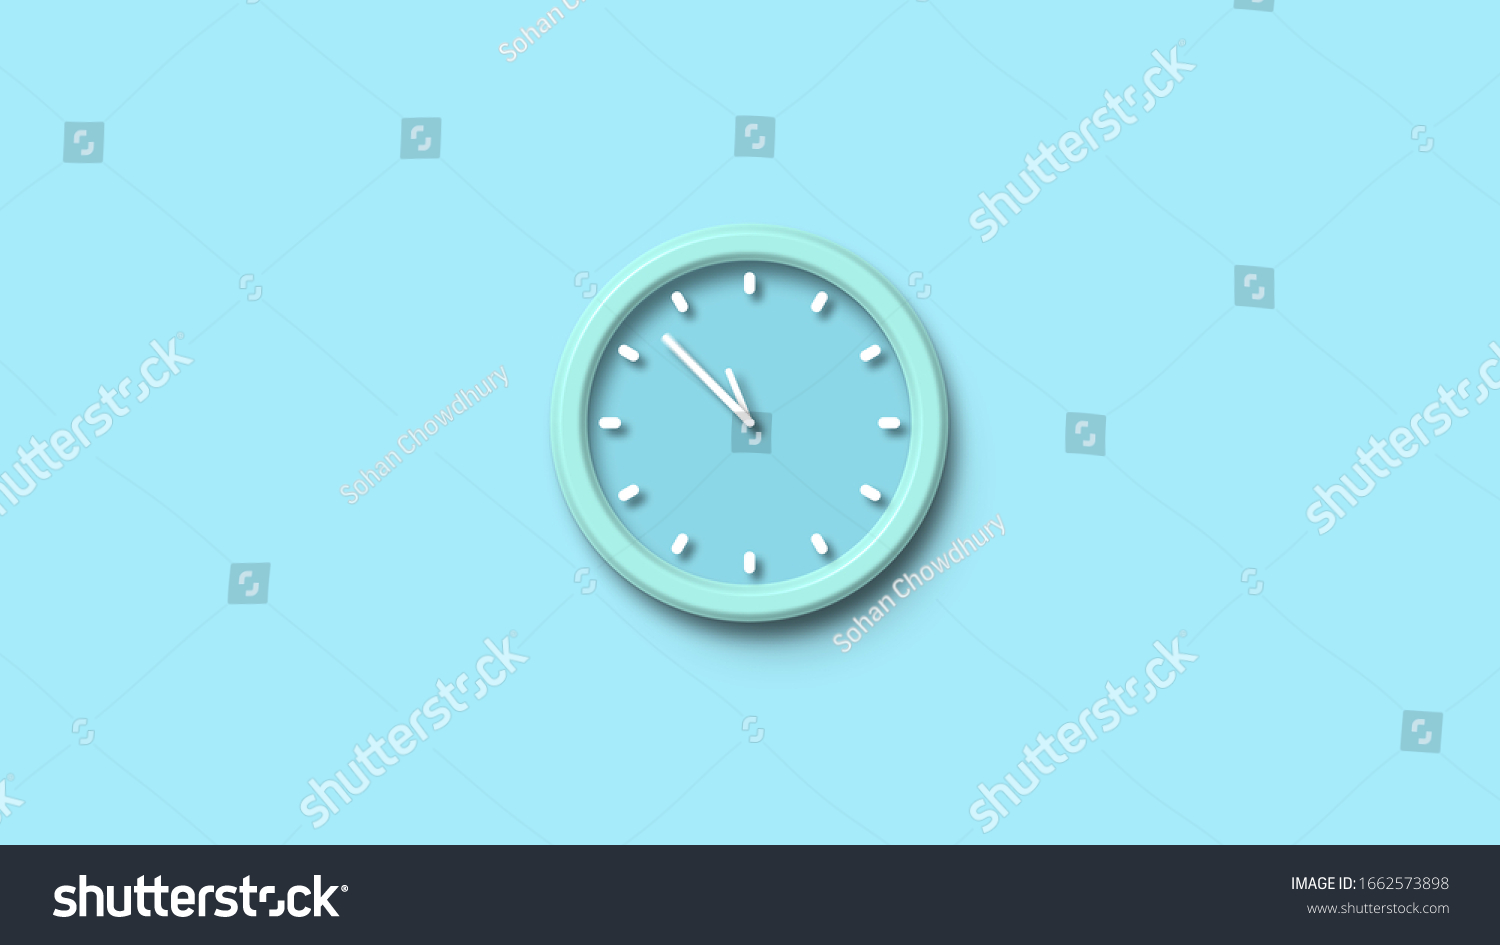 Amazing aqua color clock images,New clock icon,clock images,Clock counting image #1662573898